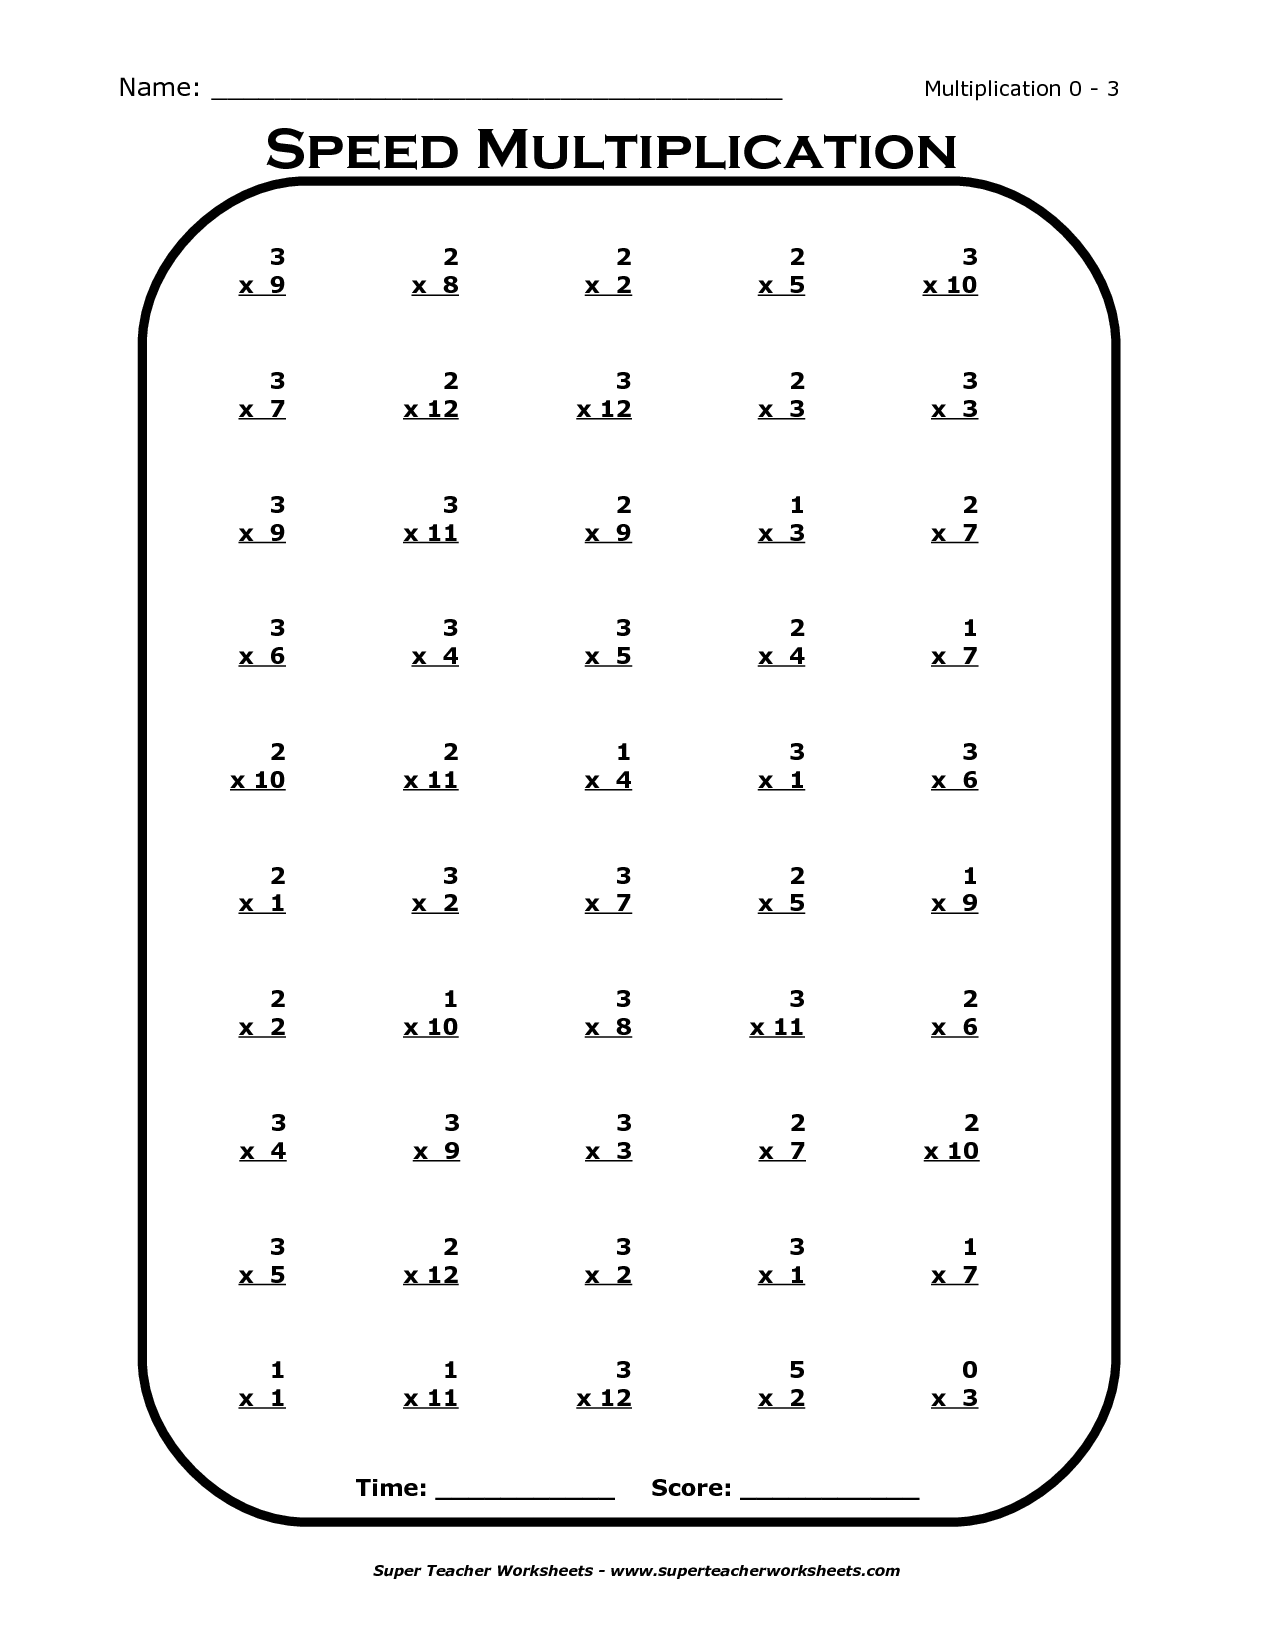 Multiplication Times Tables Worksheets Image